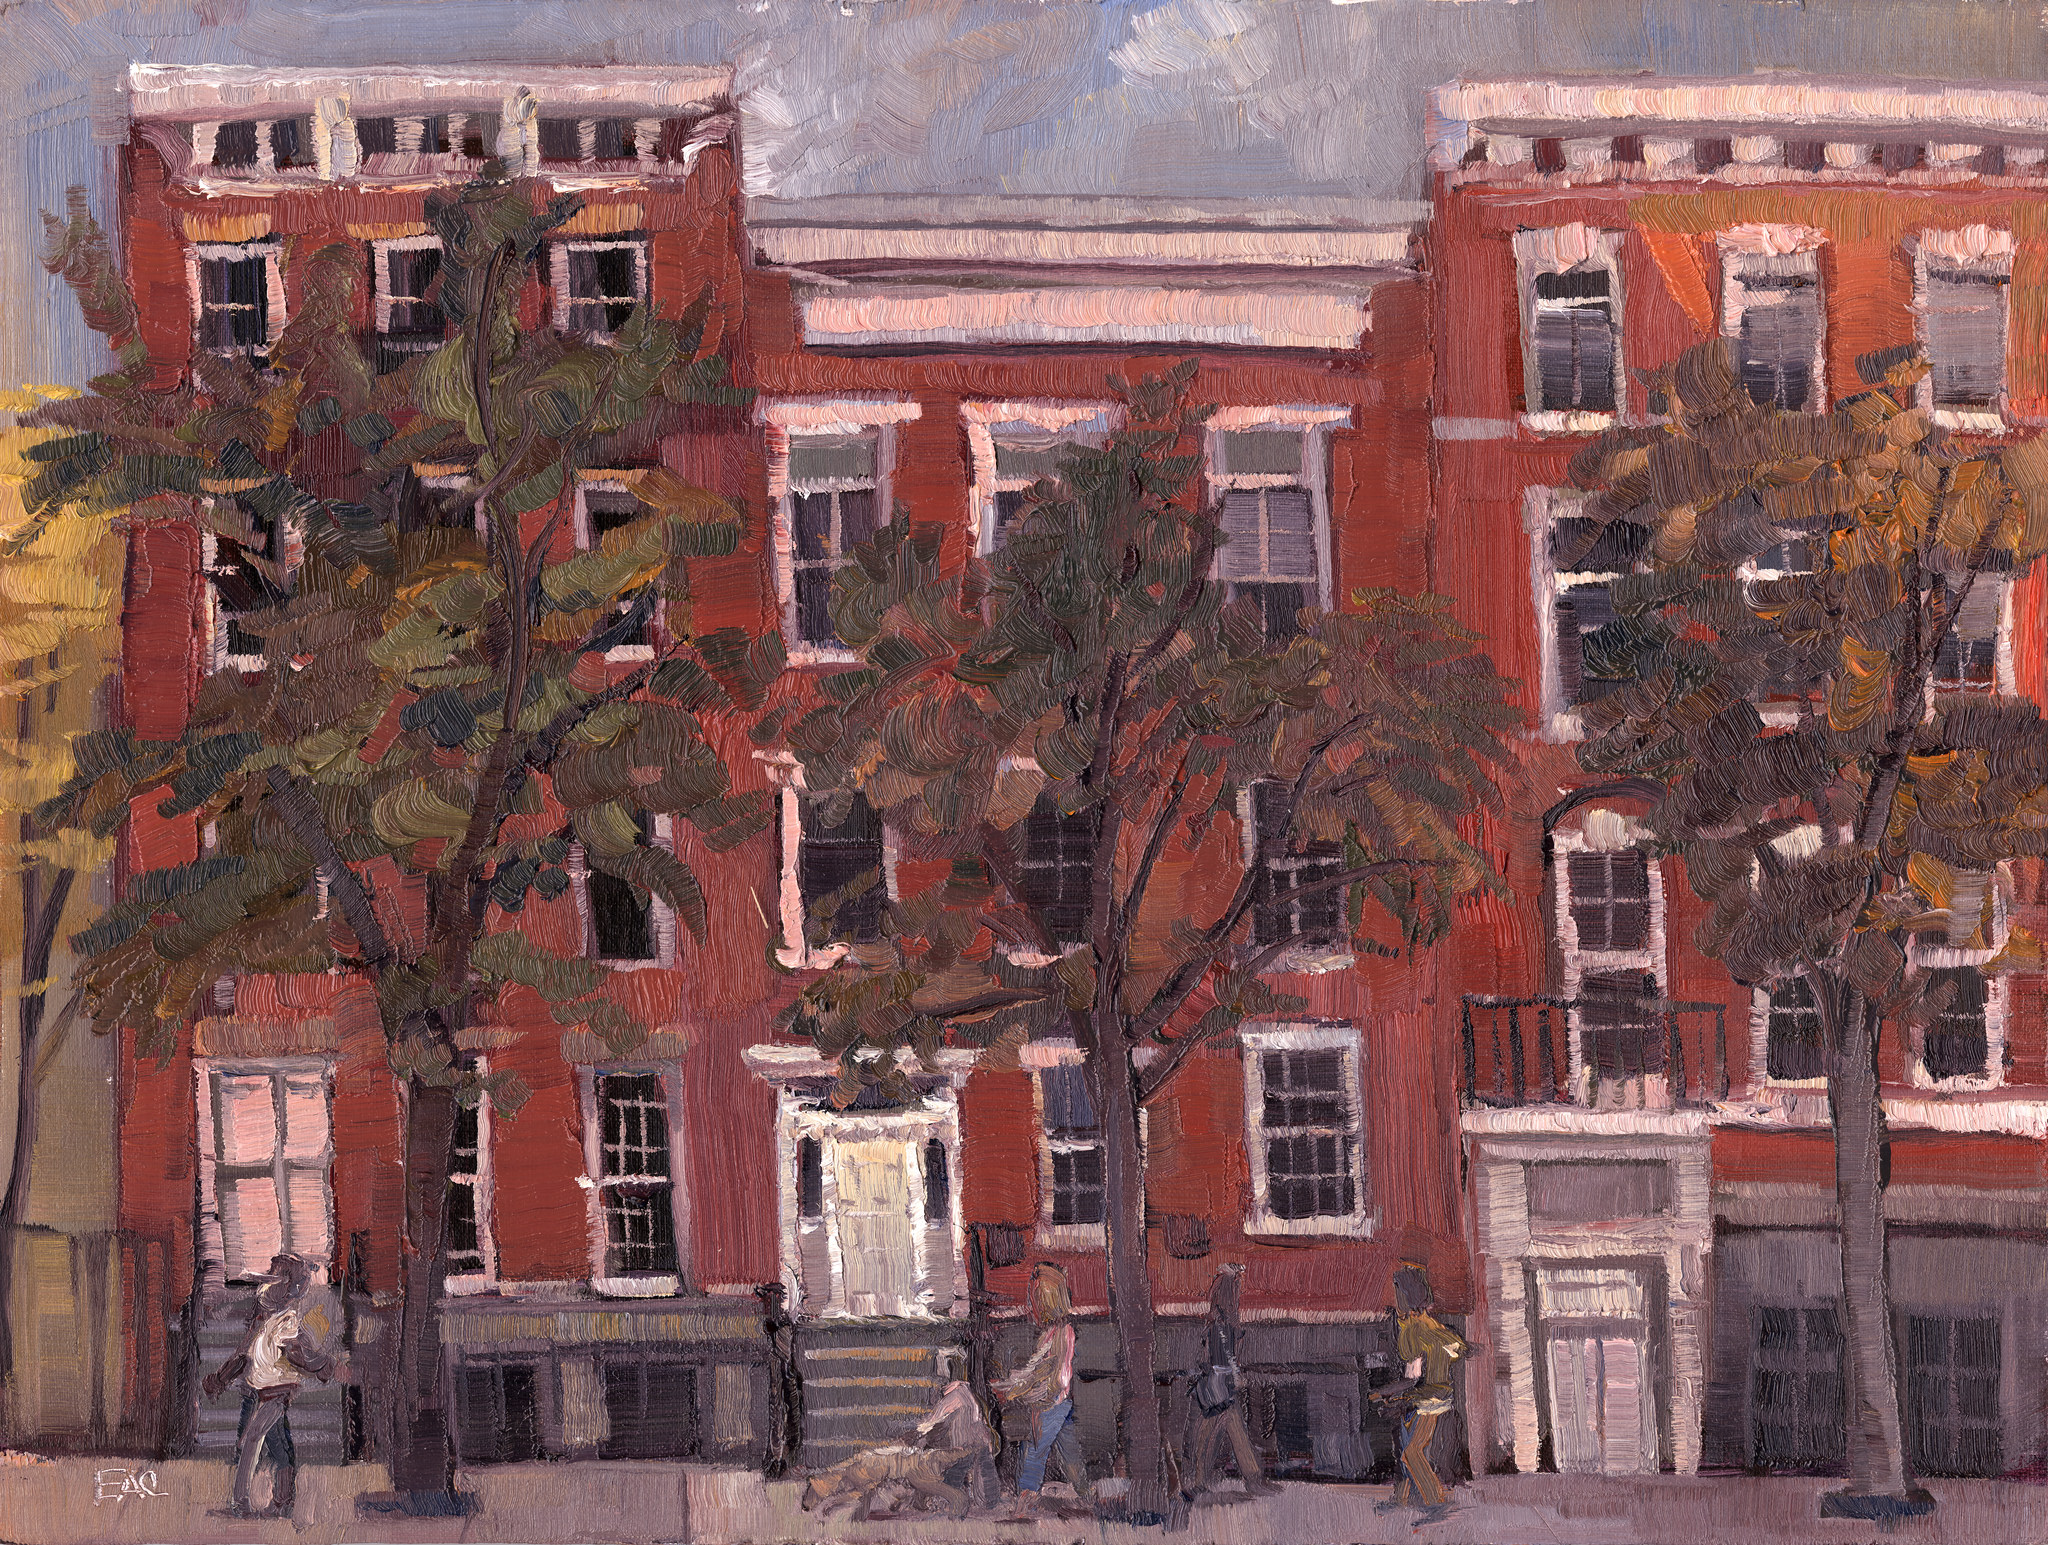 Painting of Henry Street Settlement headquarters